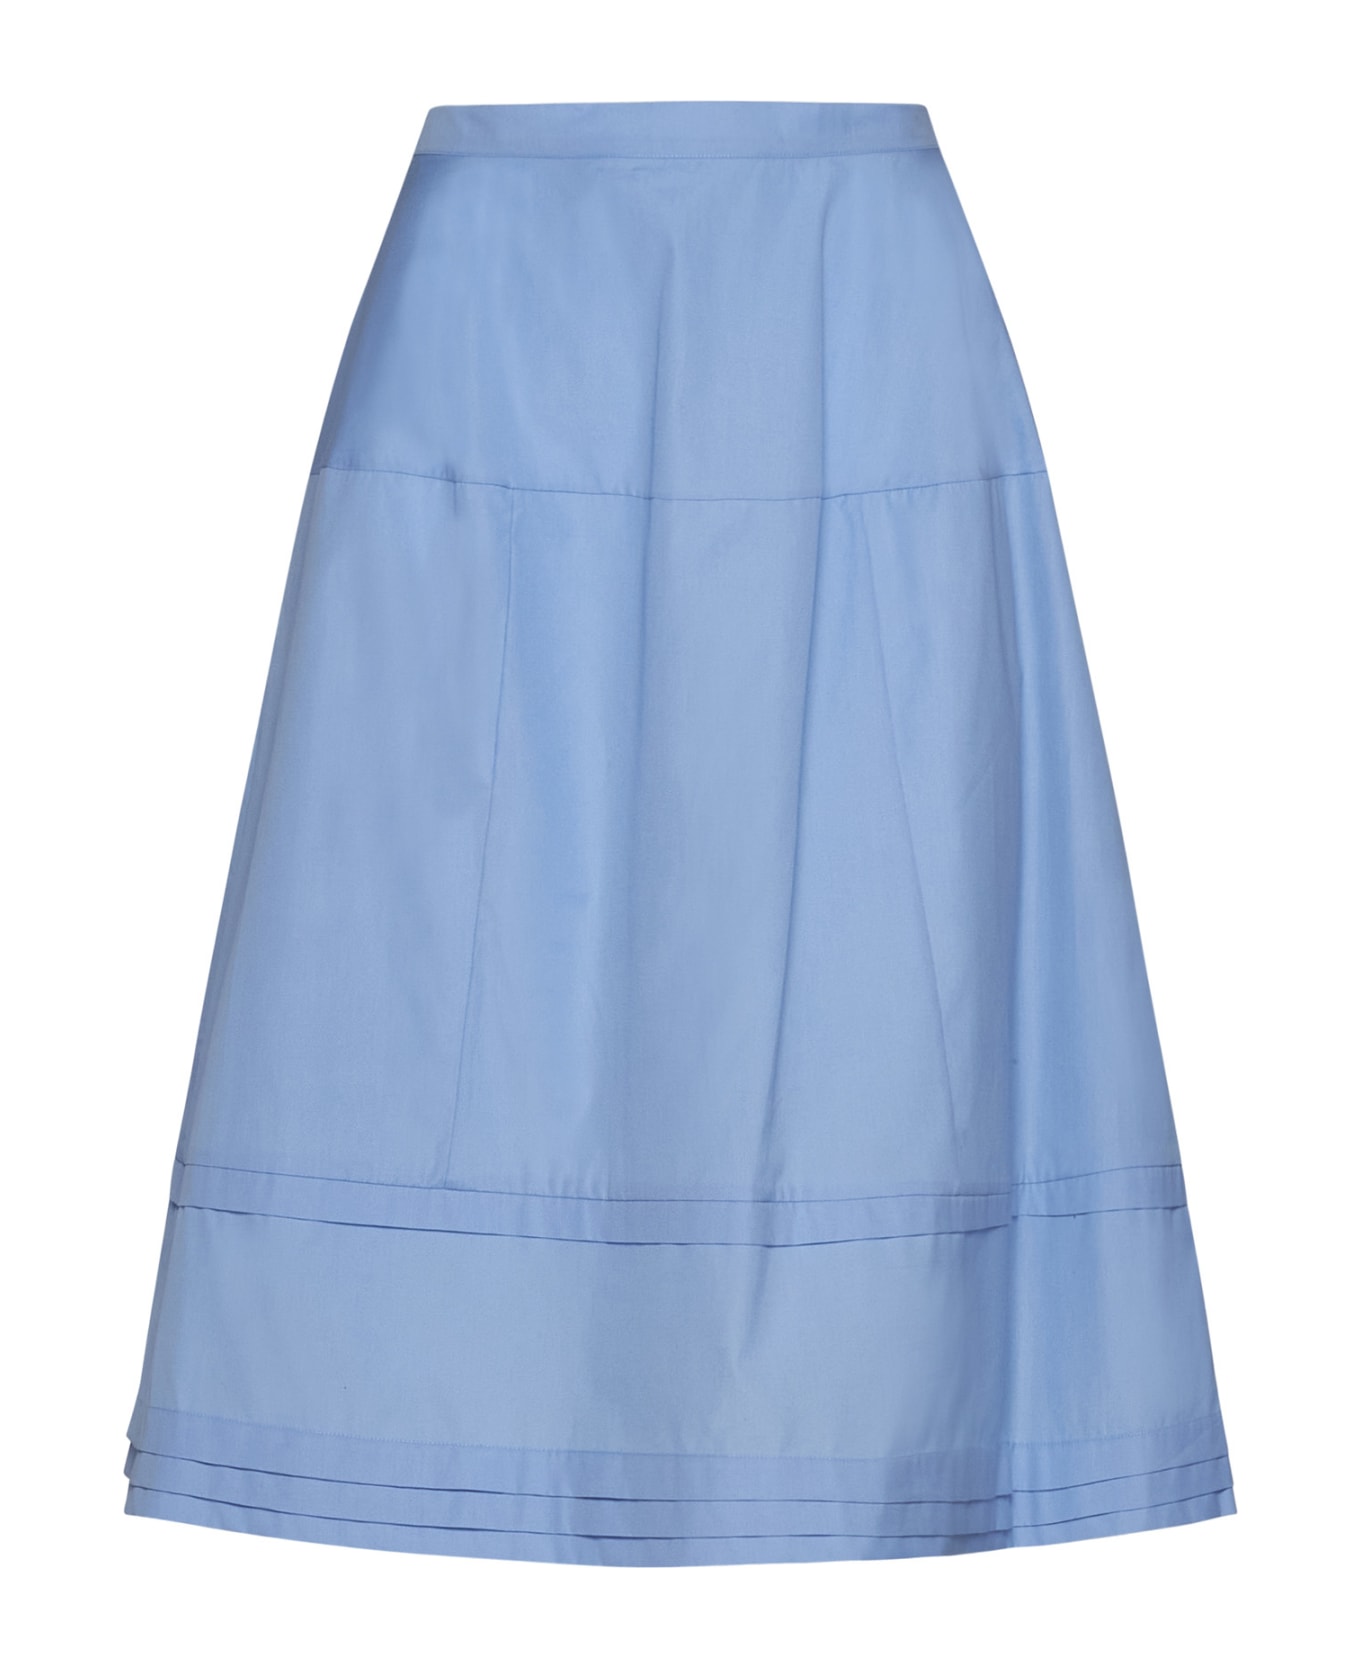 Marni Skirt - Iris blue